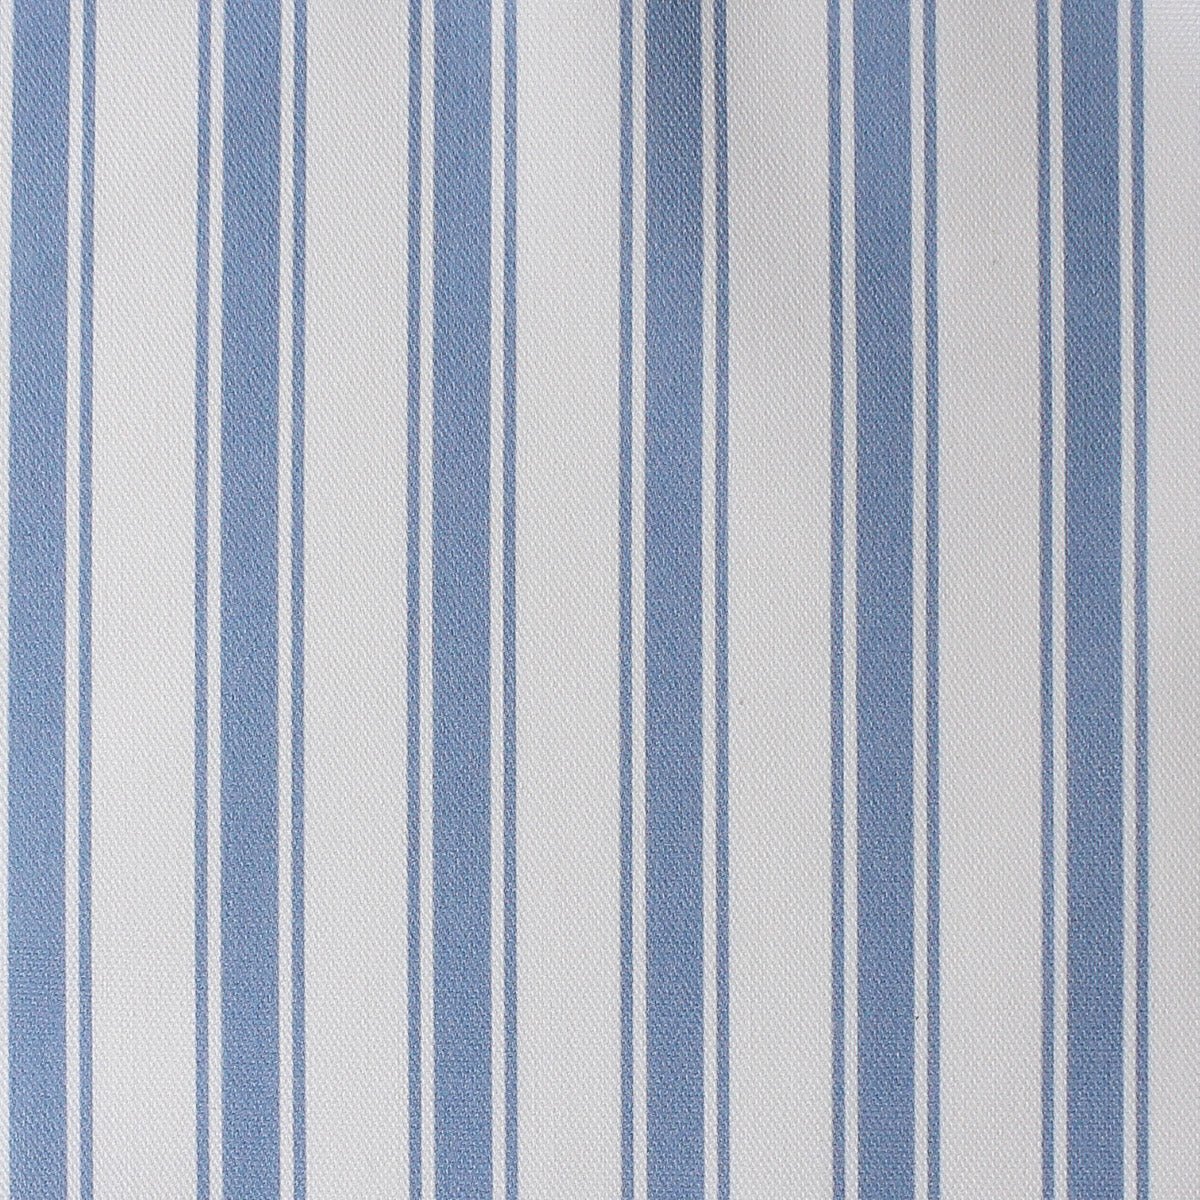 Regatta Stripe Fabric - Breeze - Hydrangea Lane Home